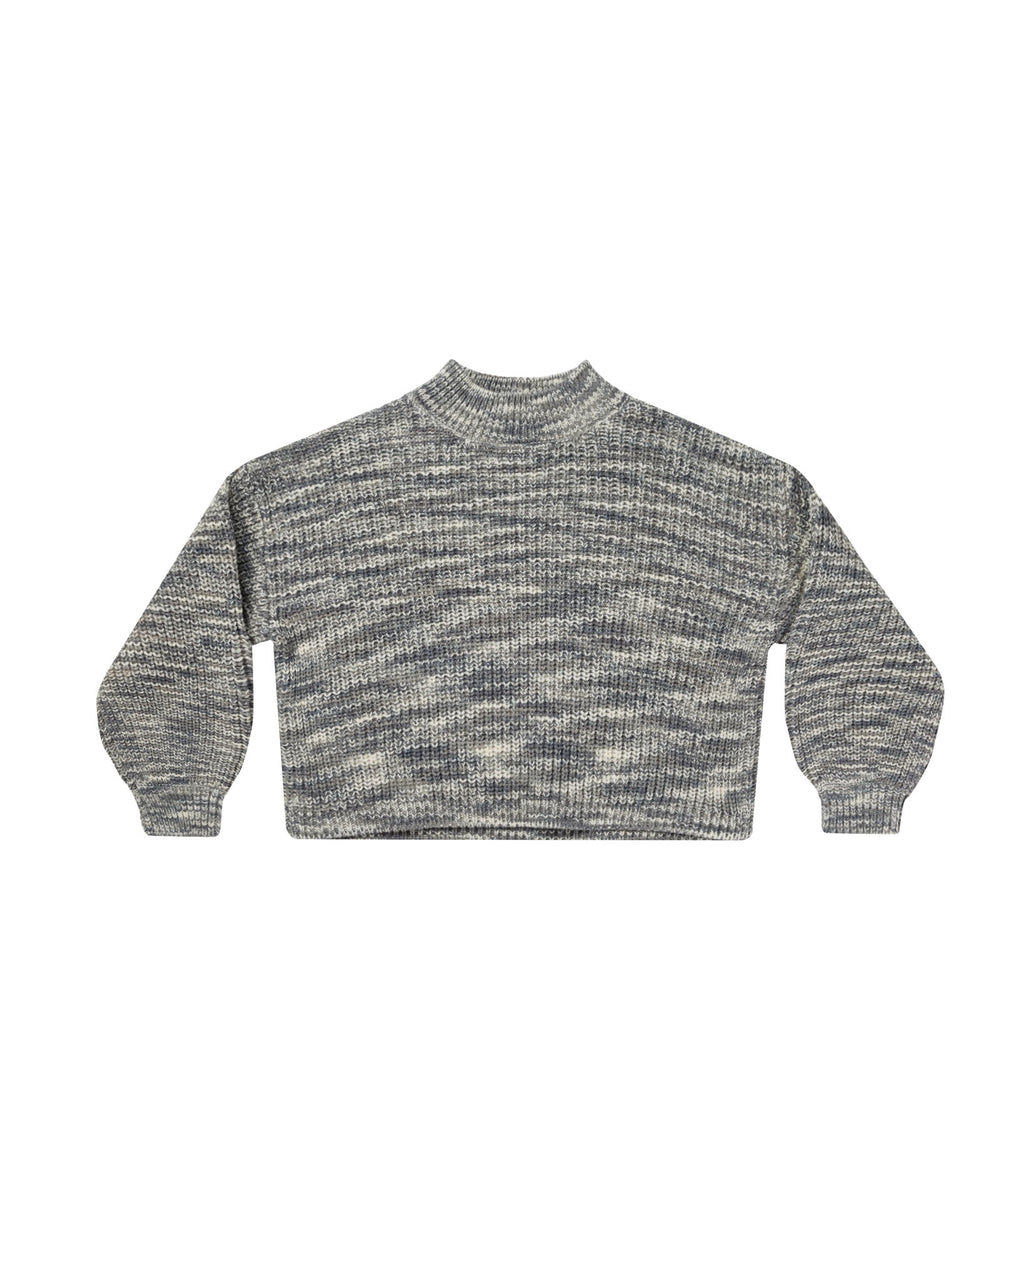 Rylee + Cru Knit Sweater - Heathered Slate